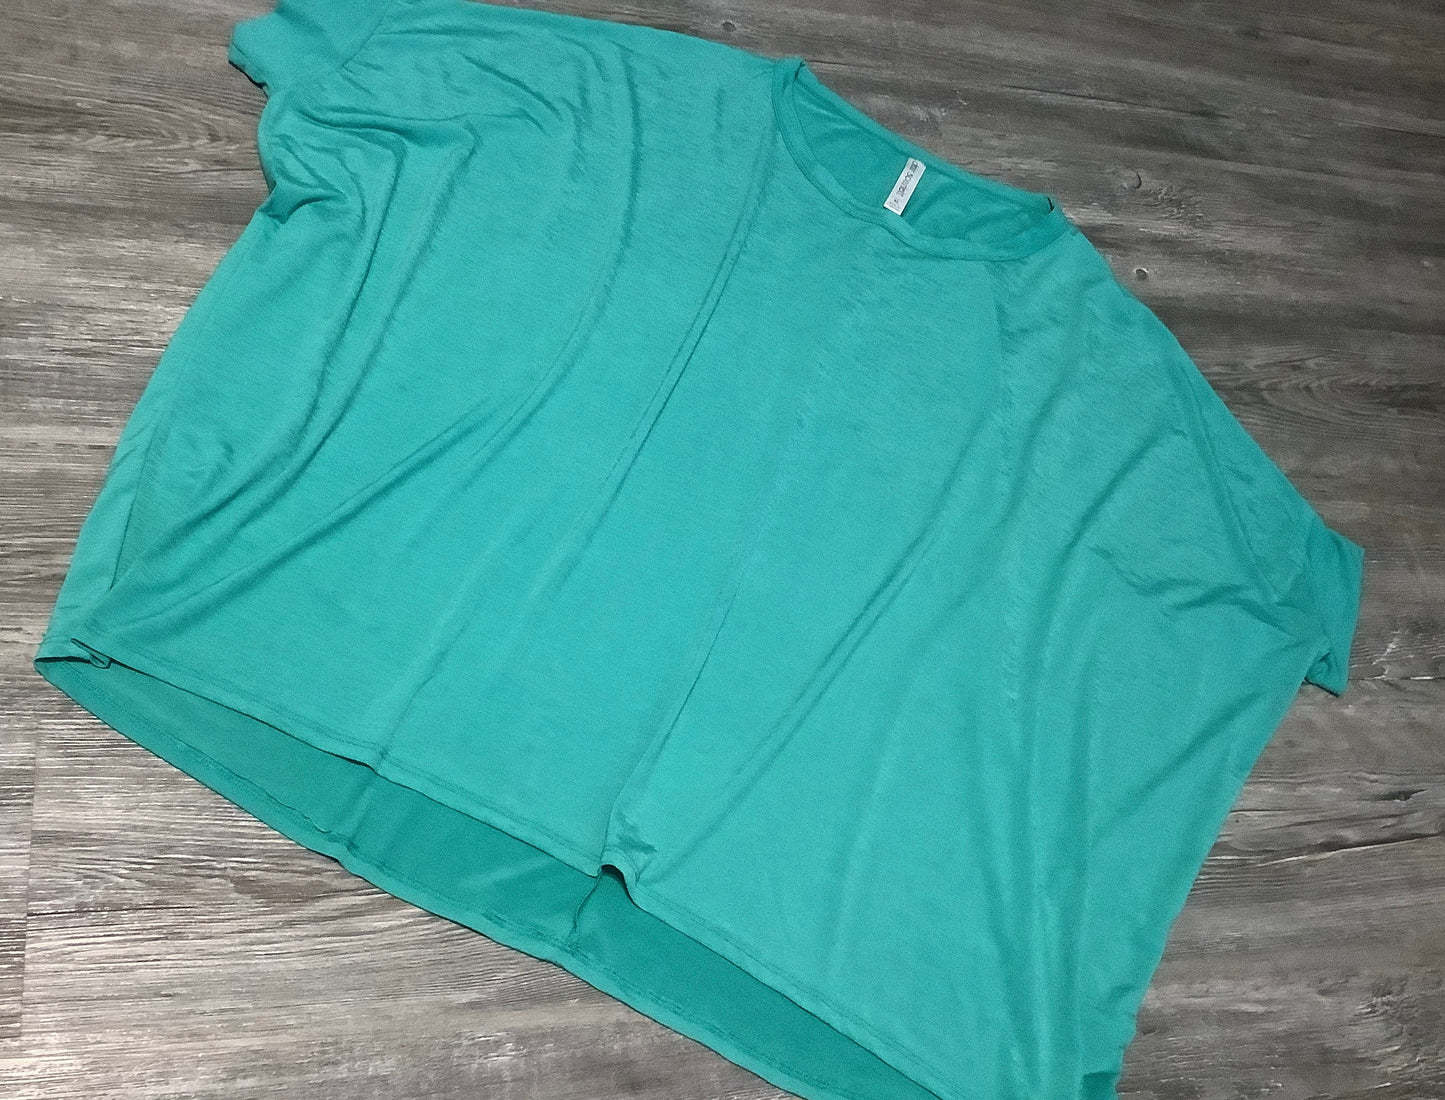 Green Top Short Sleeve Clothes Mentor, Size Xl